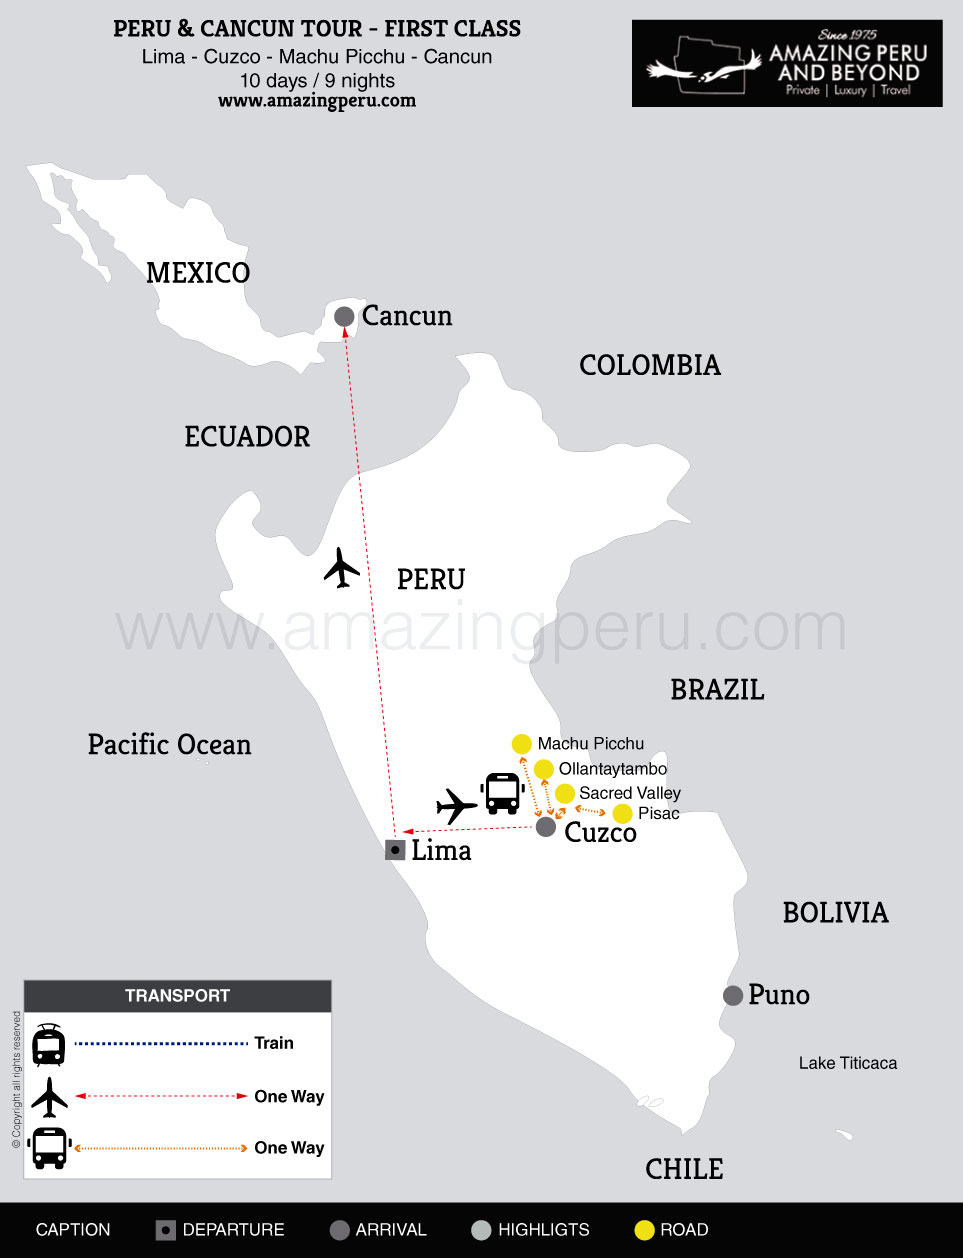 2021 Peru & Cancun Tour - First Class - 10 days / 9 nights.